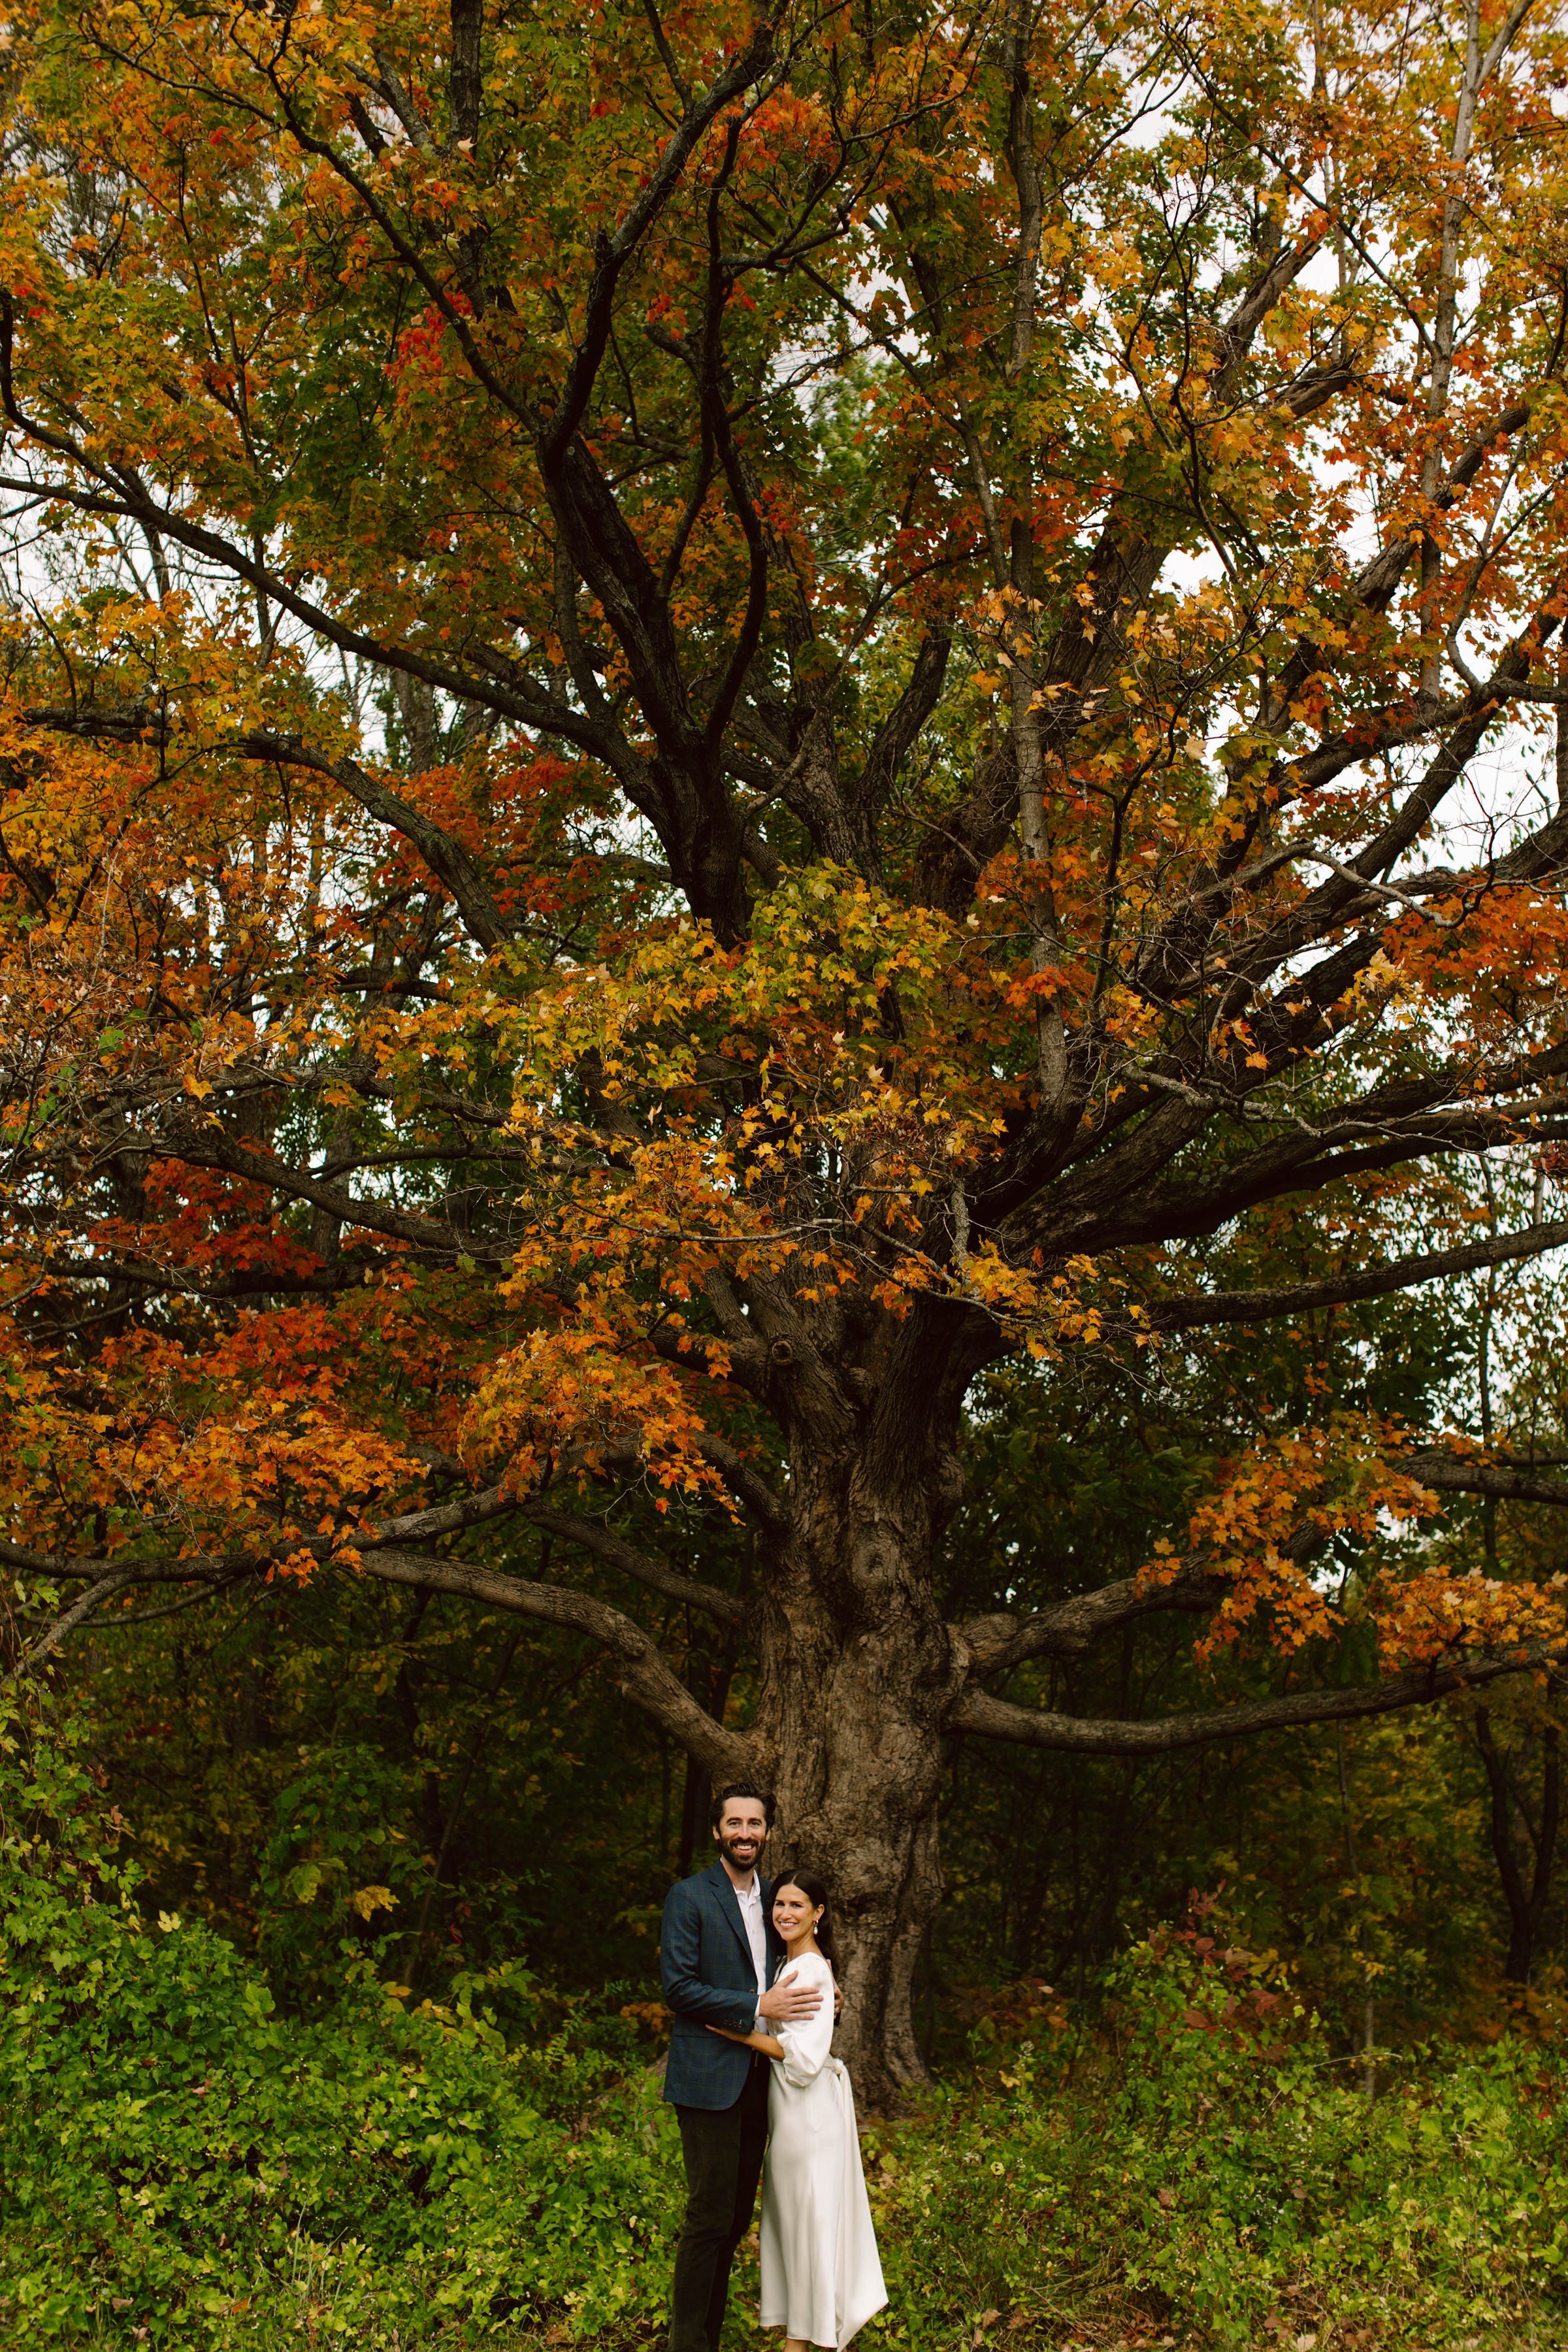 Autumn Backyard Micro-Wedding in the Highlands- Louisville Kentucky 054.jpg